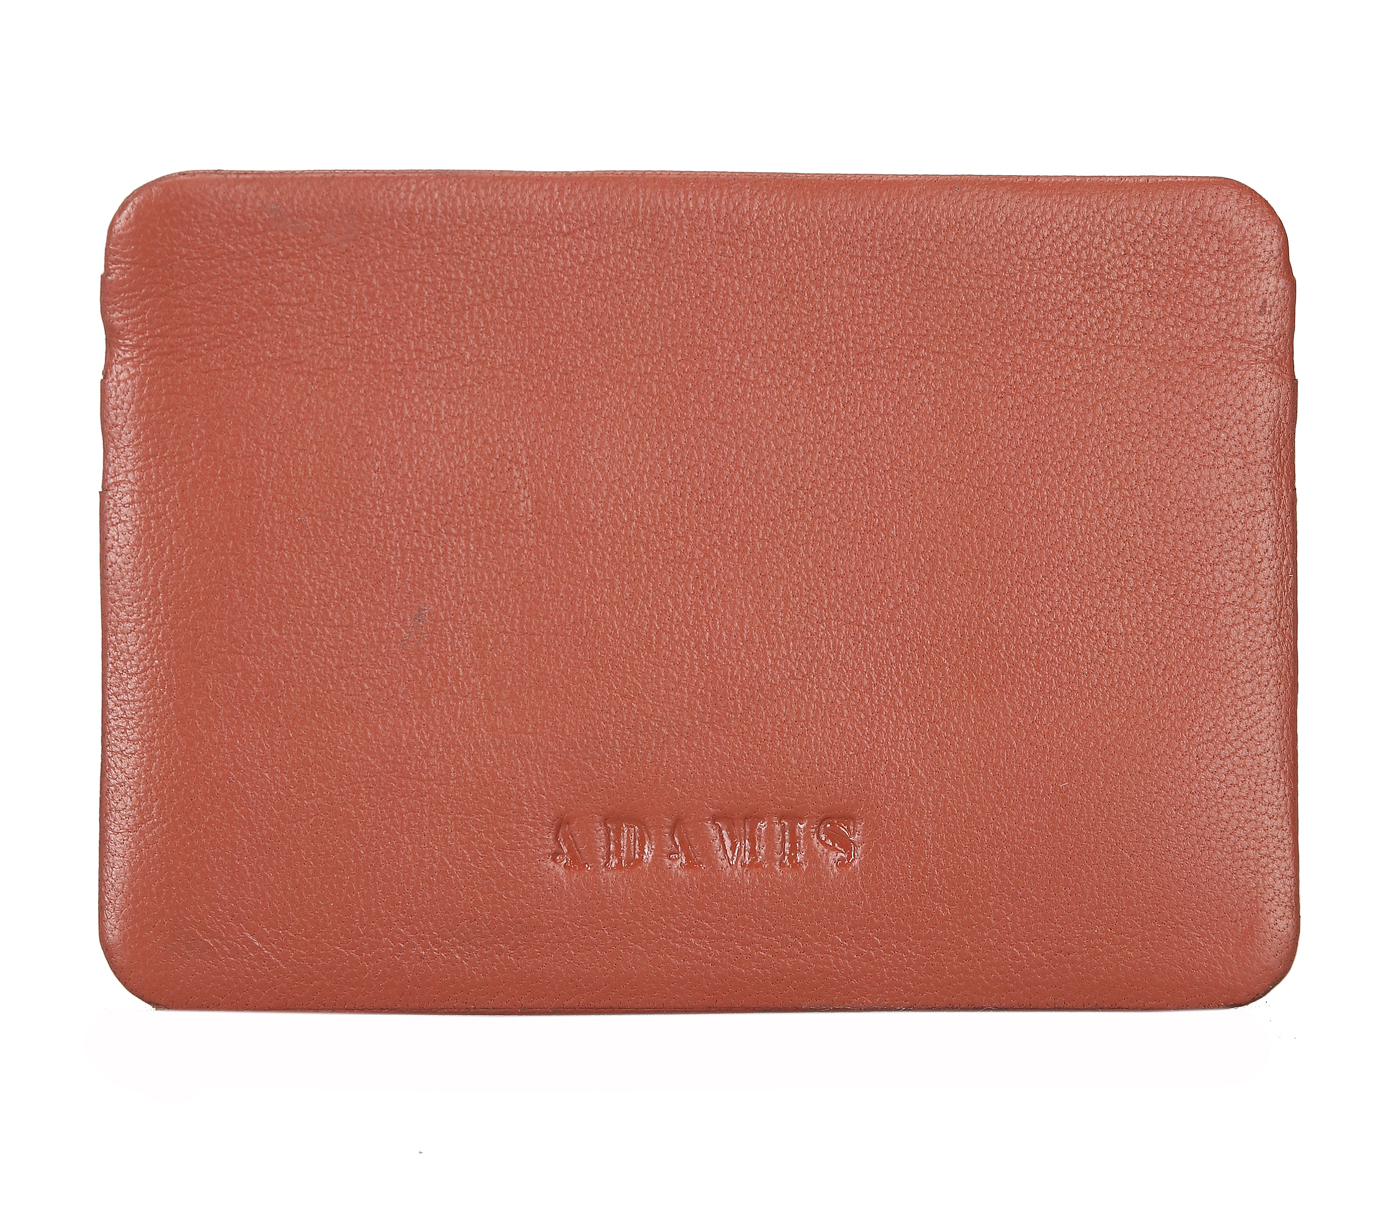 VW8--Ultra Slim card Case in Genuine Leather - Tan